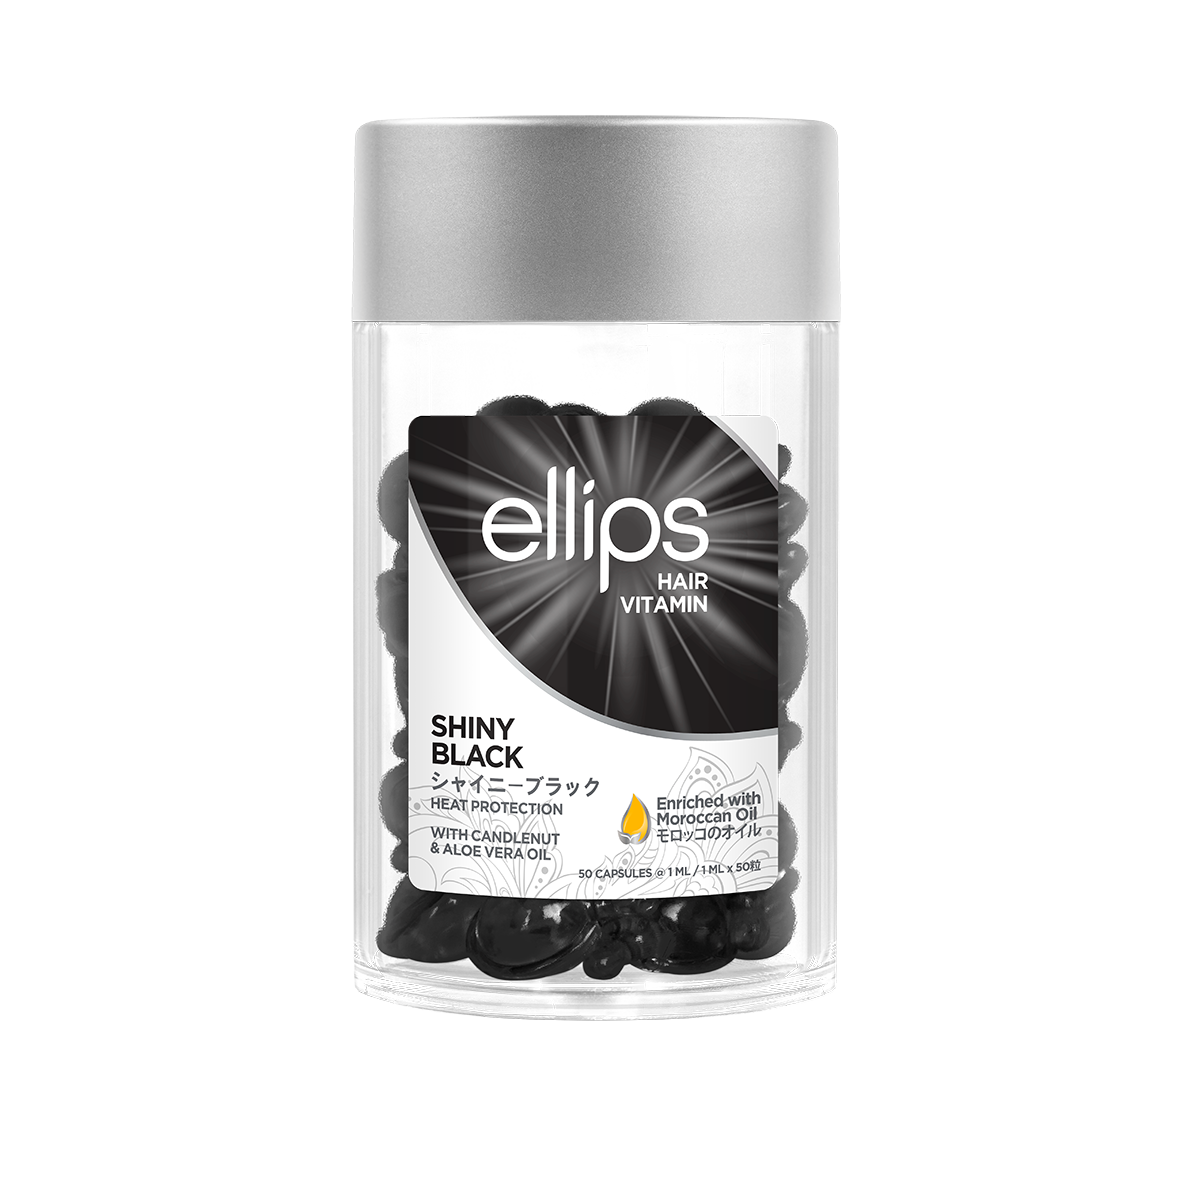 ellips Shiny Black - 50 capsule jar